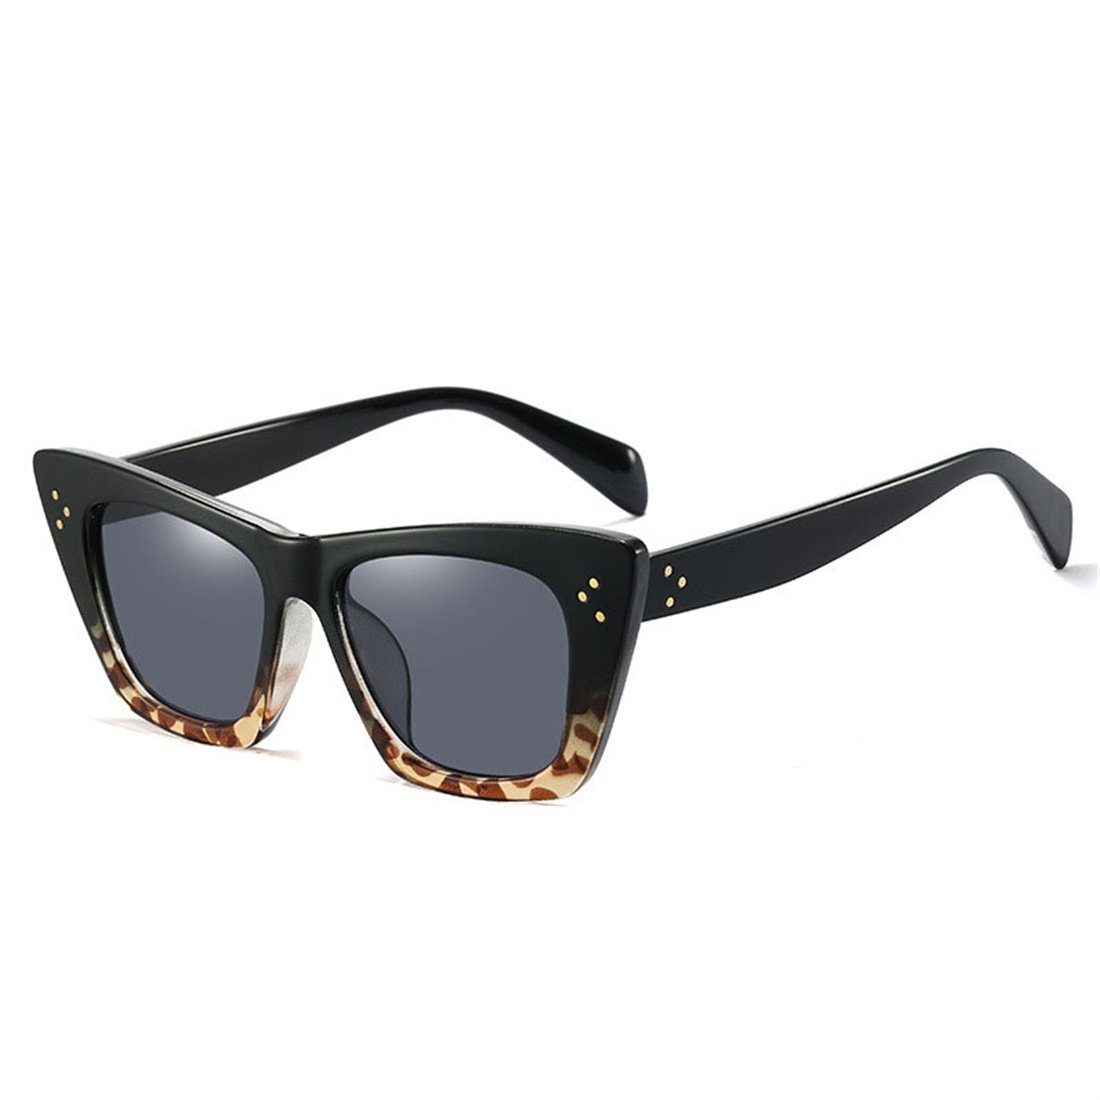 Sonnenbrillen Modische DÖRÖY Frauen, Sonnenbrillen Katzenaugenbrillen, Sonnenbrille für